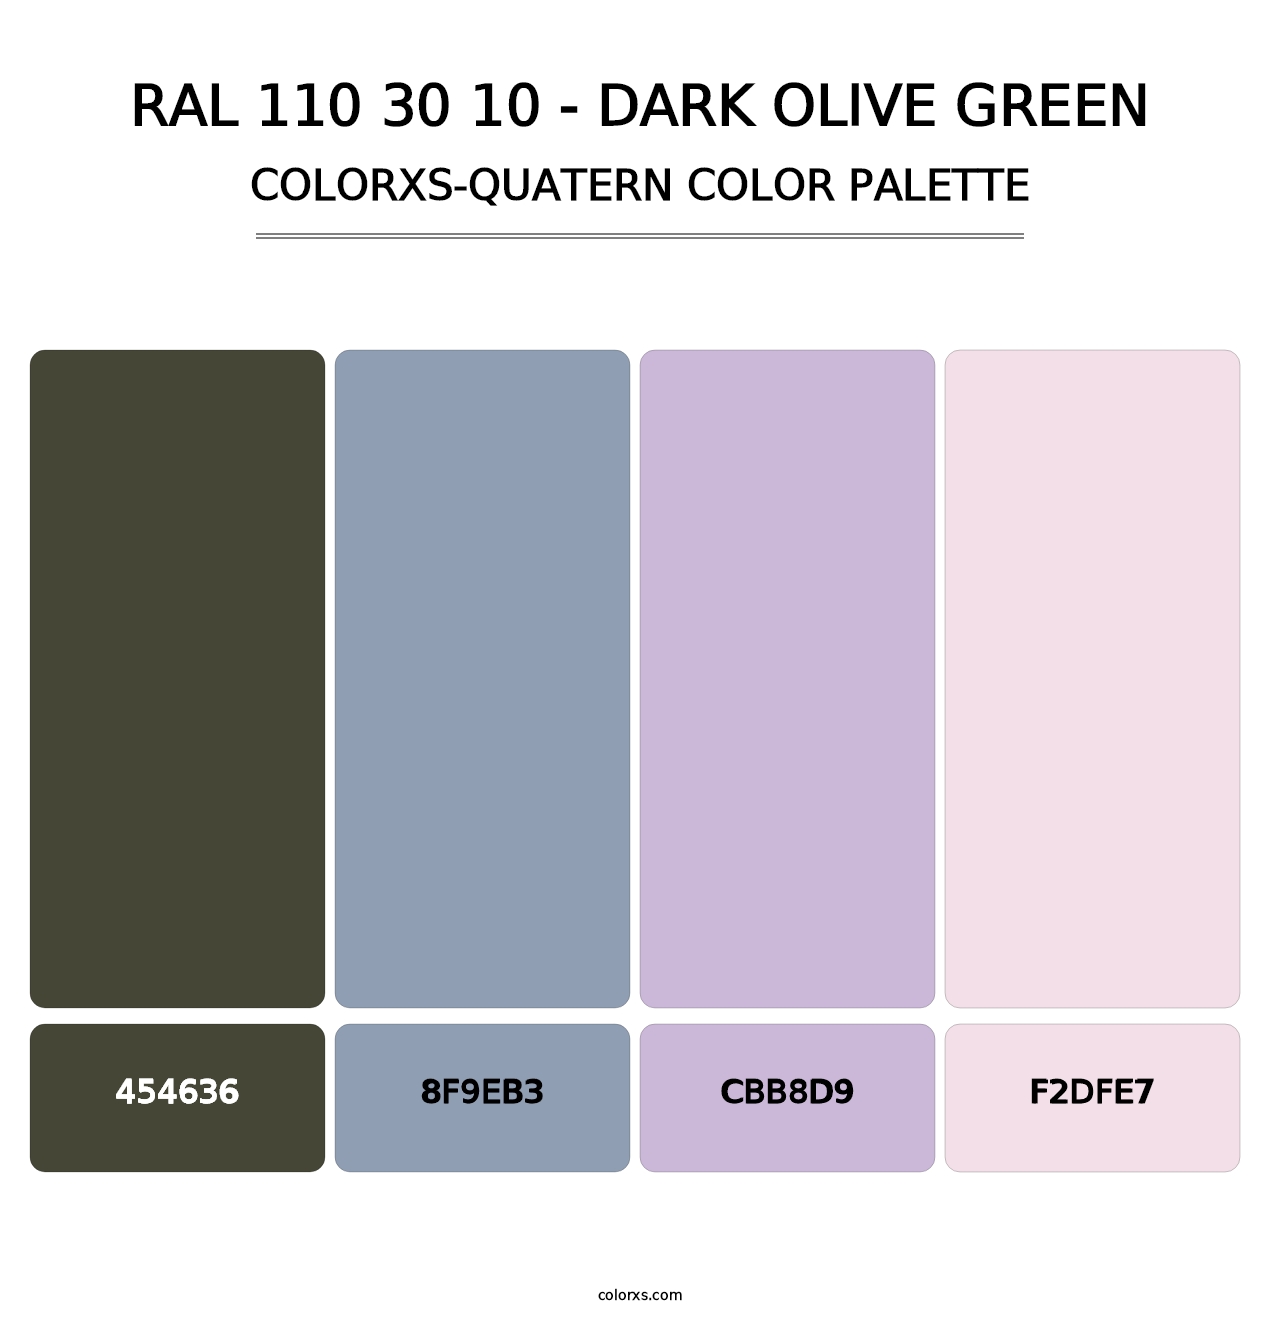 RAL 110 30 10 - Dark Olive Green - Colorxs Quatern Palette